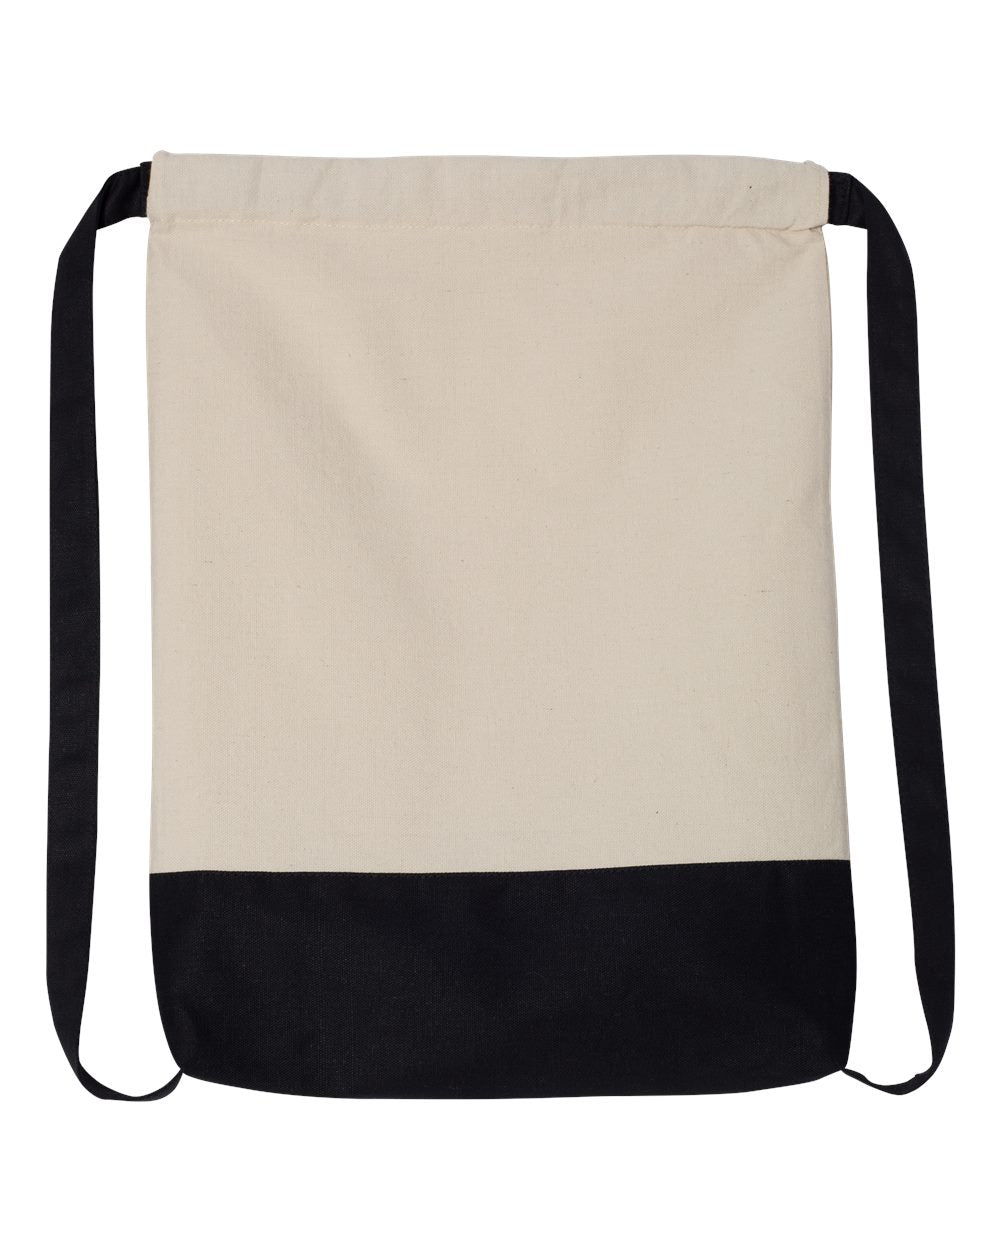 Sandyston Soccer design 2 Drawstring Bag